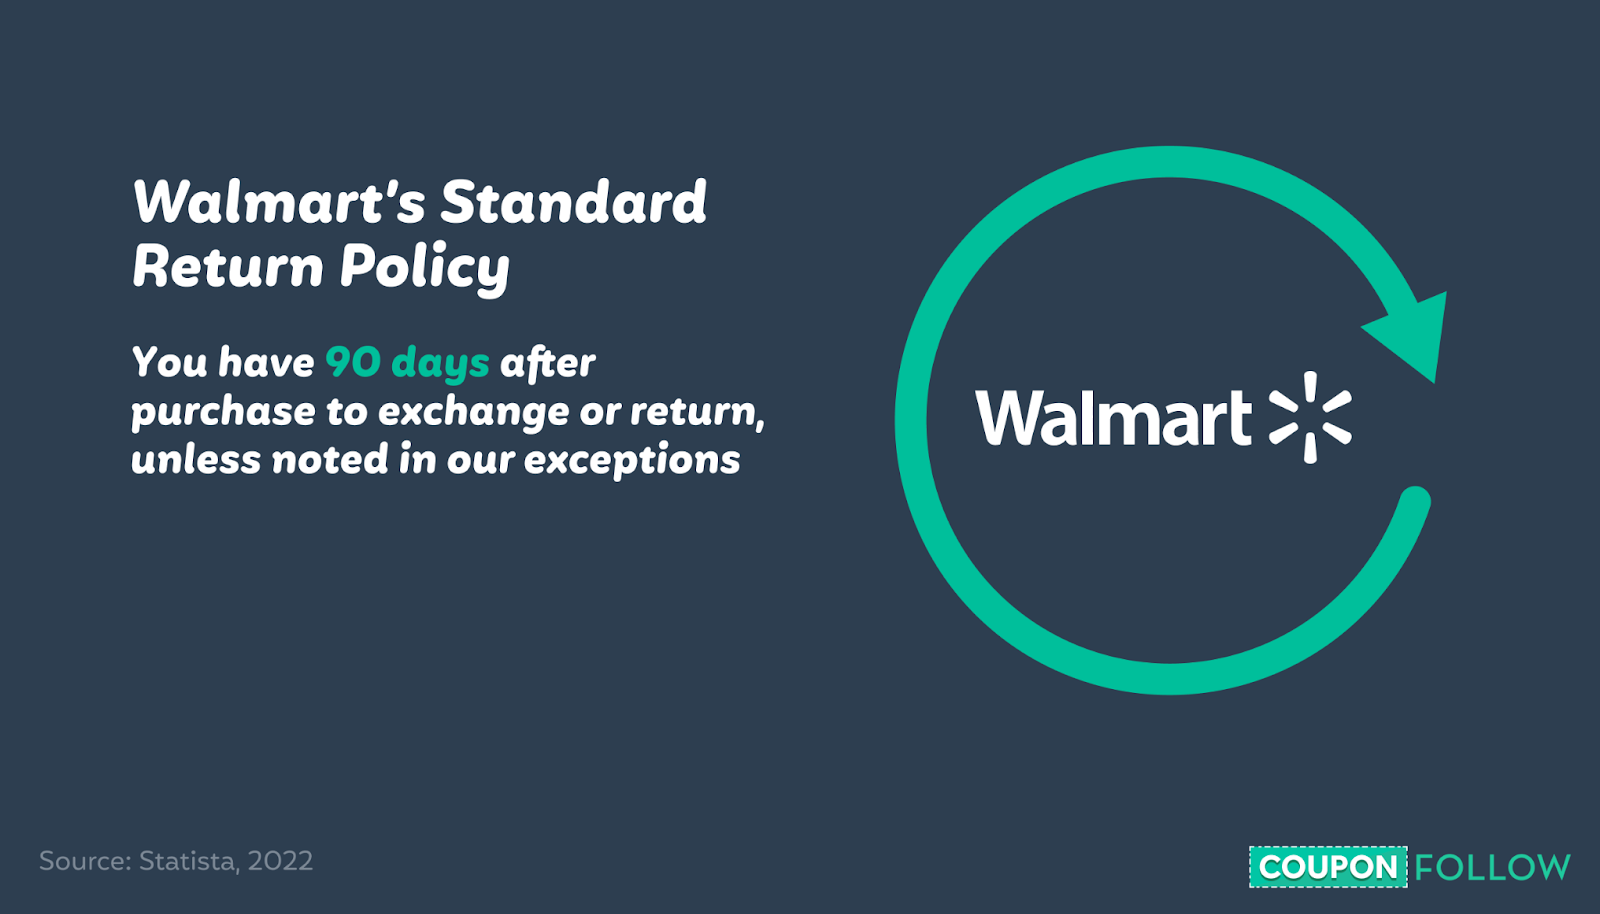 image showing walmart’s standard return policy